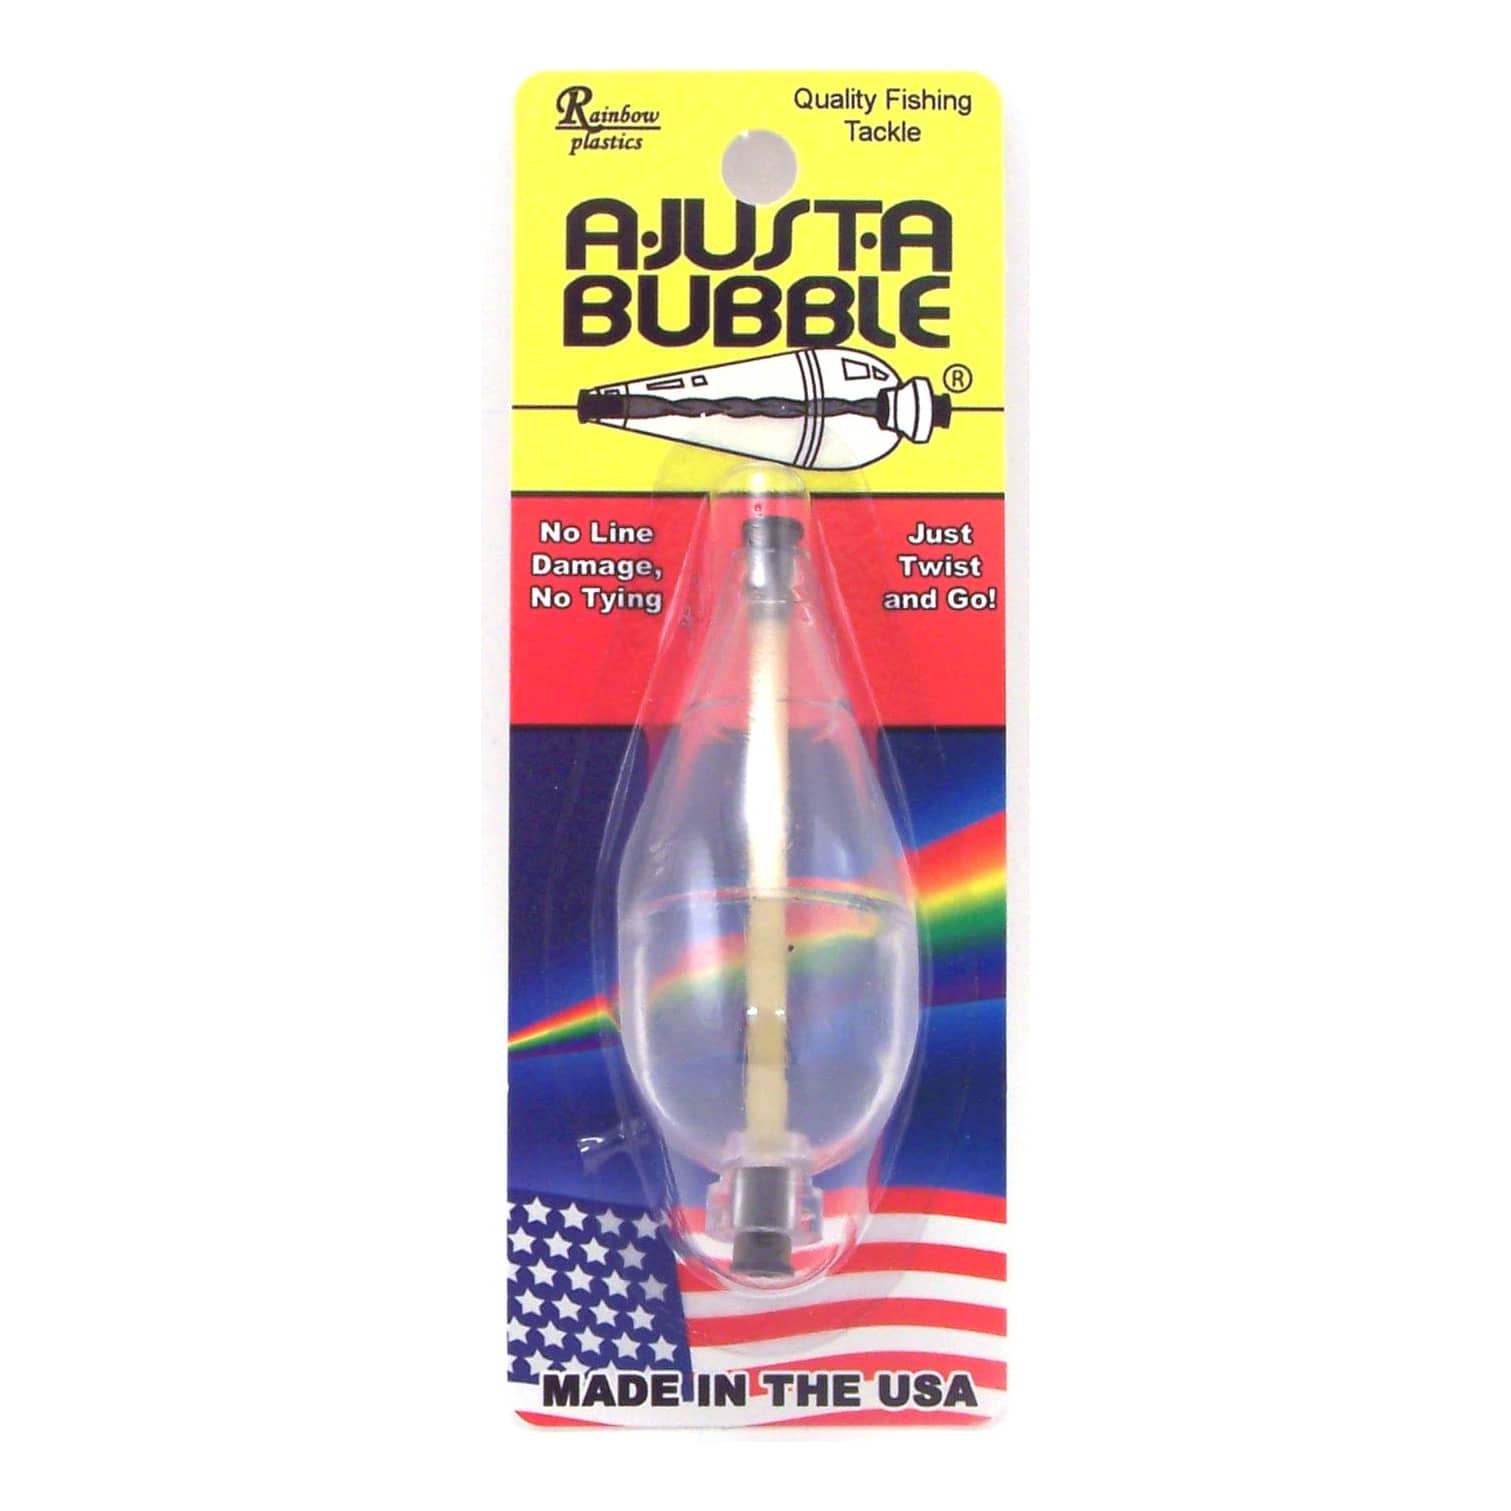 Rainbow Plastics A-Just-A-Bubble